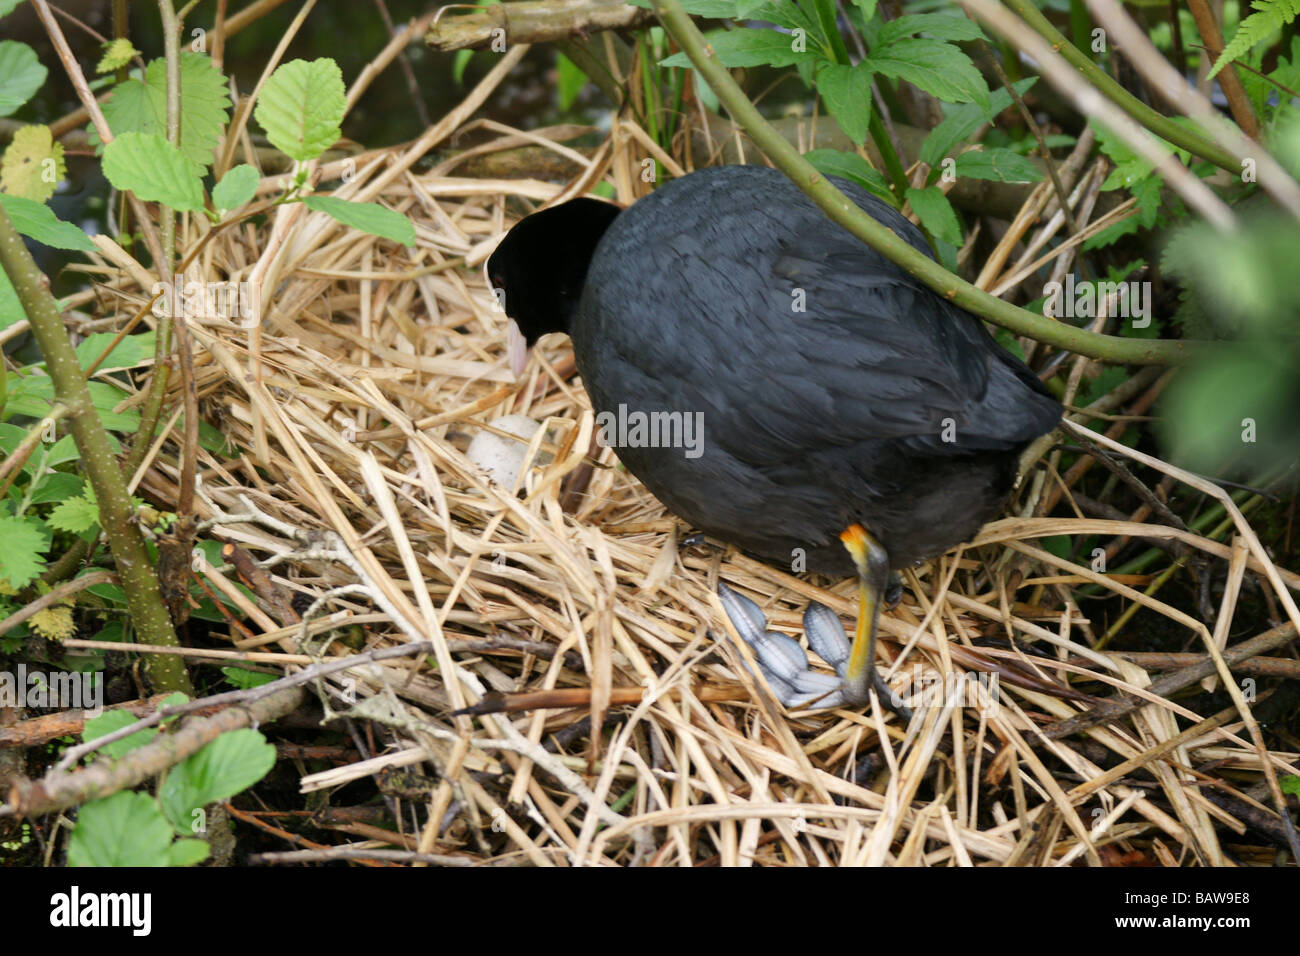 Nesting coot bird fulica atra black one alone in nest outdoors Stock Photo